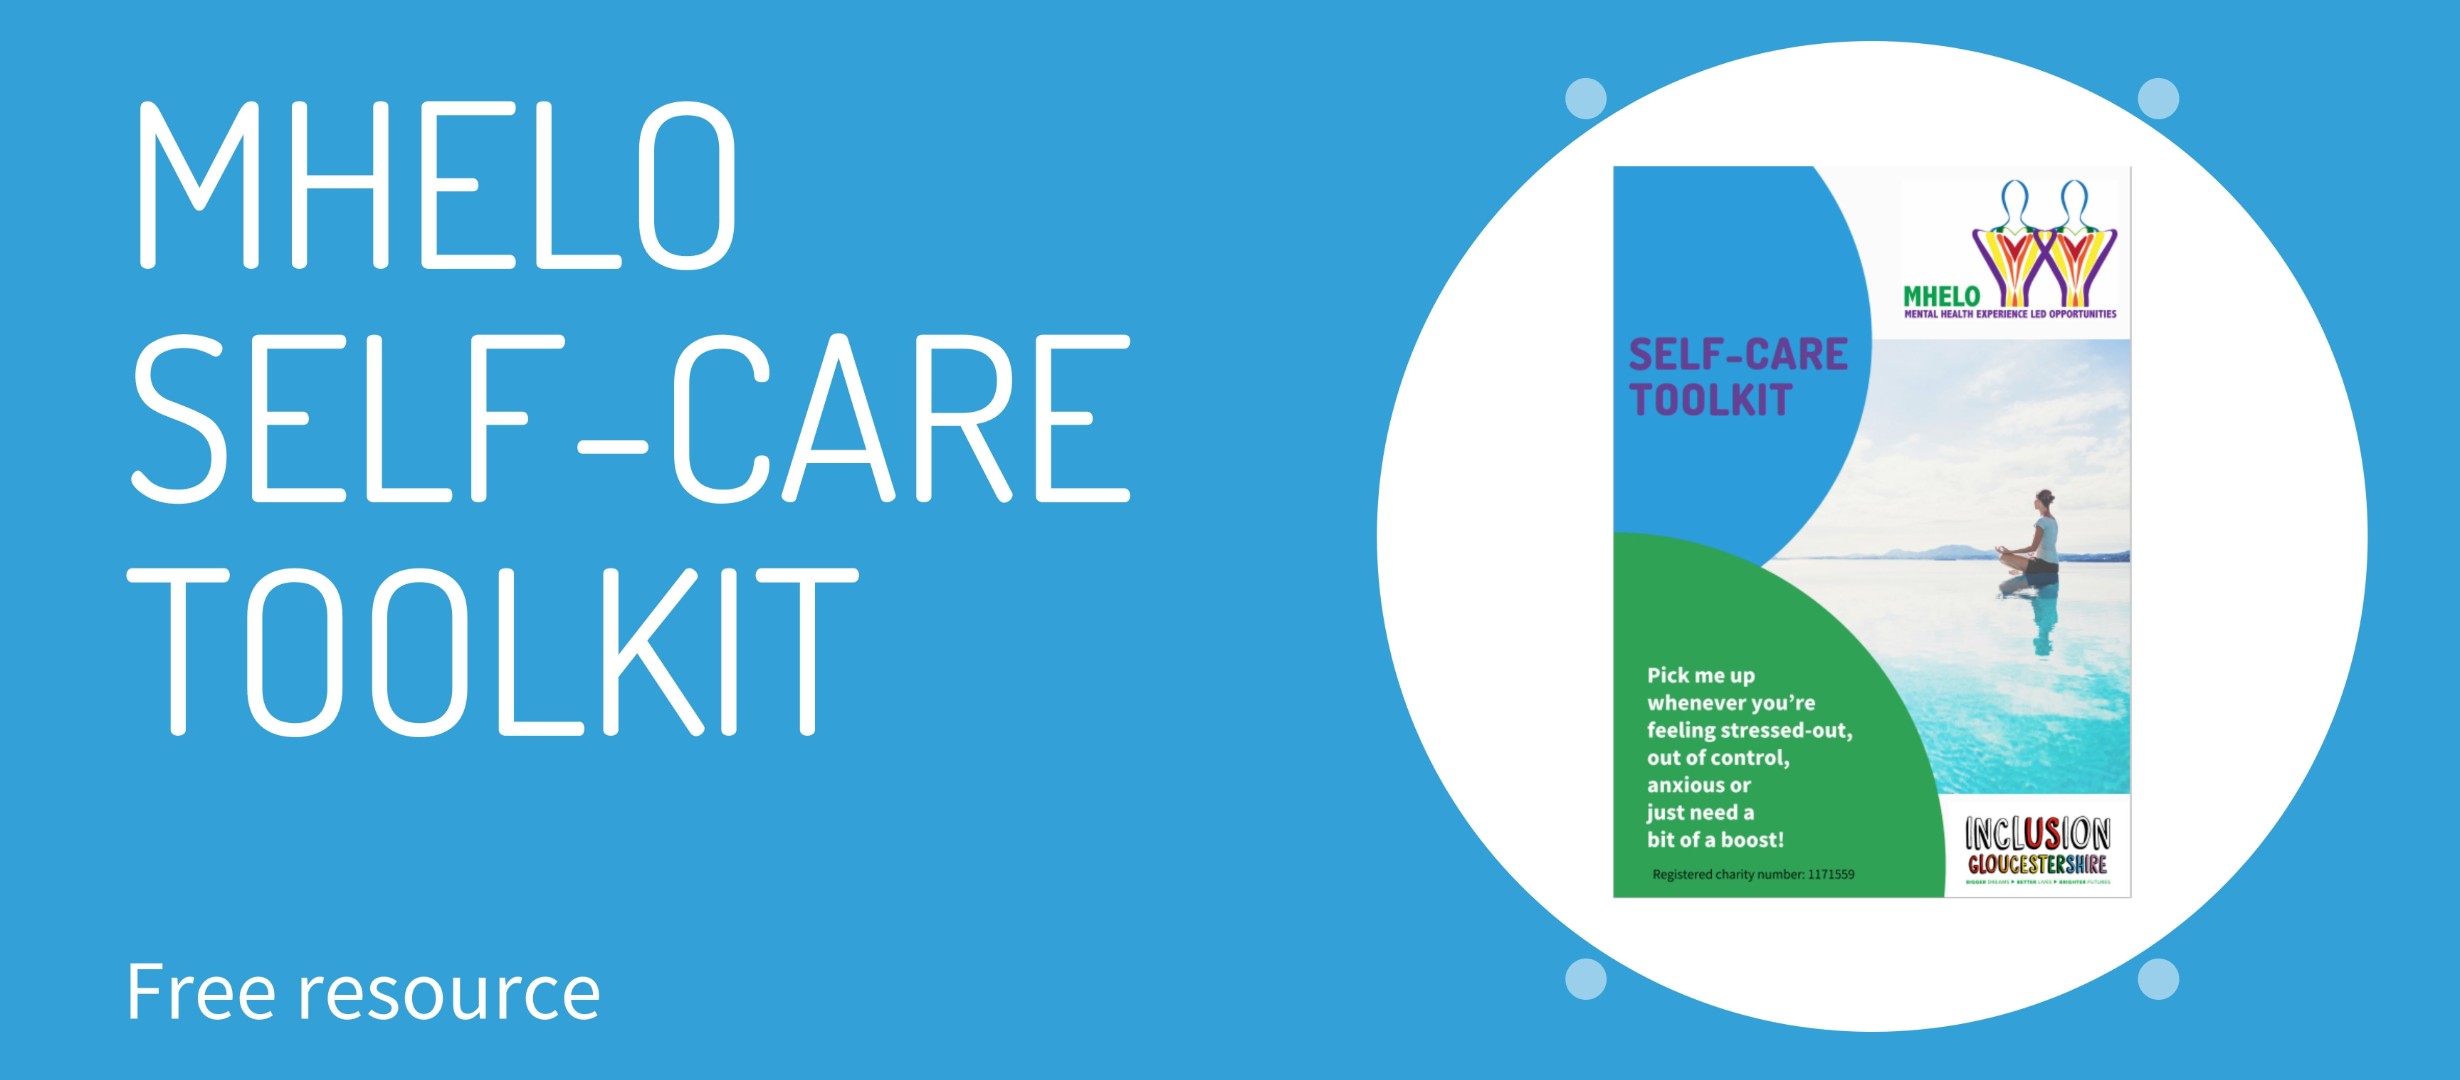 Free resource- MHELO self-care toolkit 